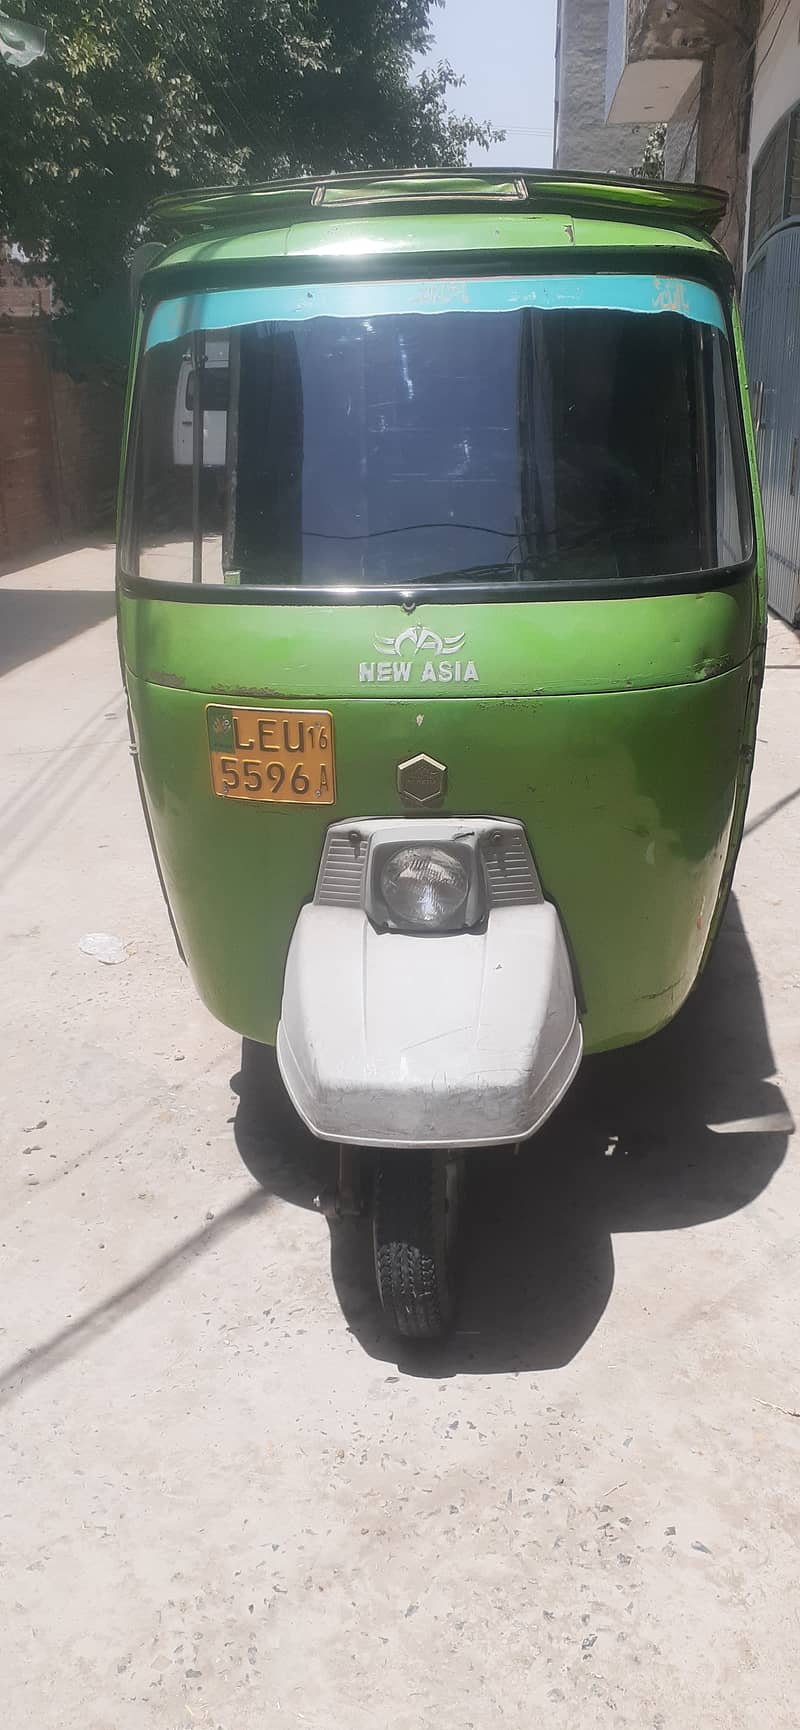 New Asia auto rickshaw 0